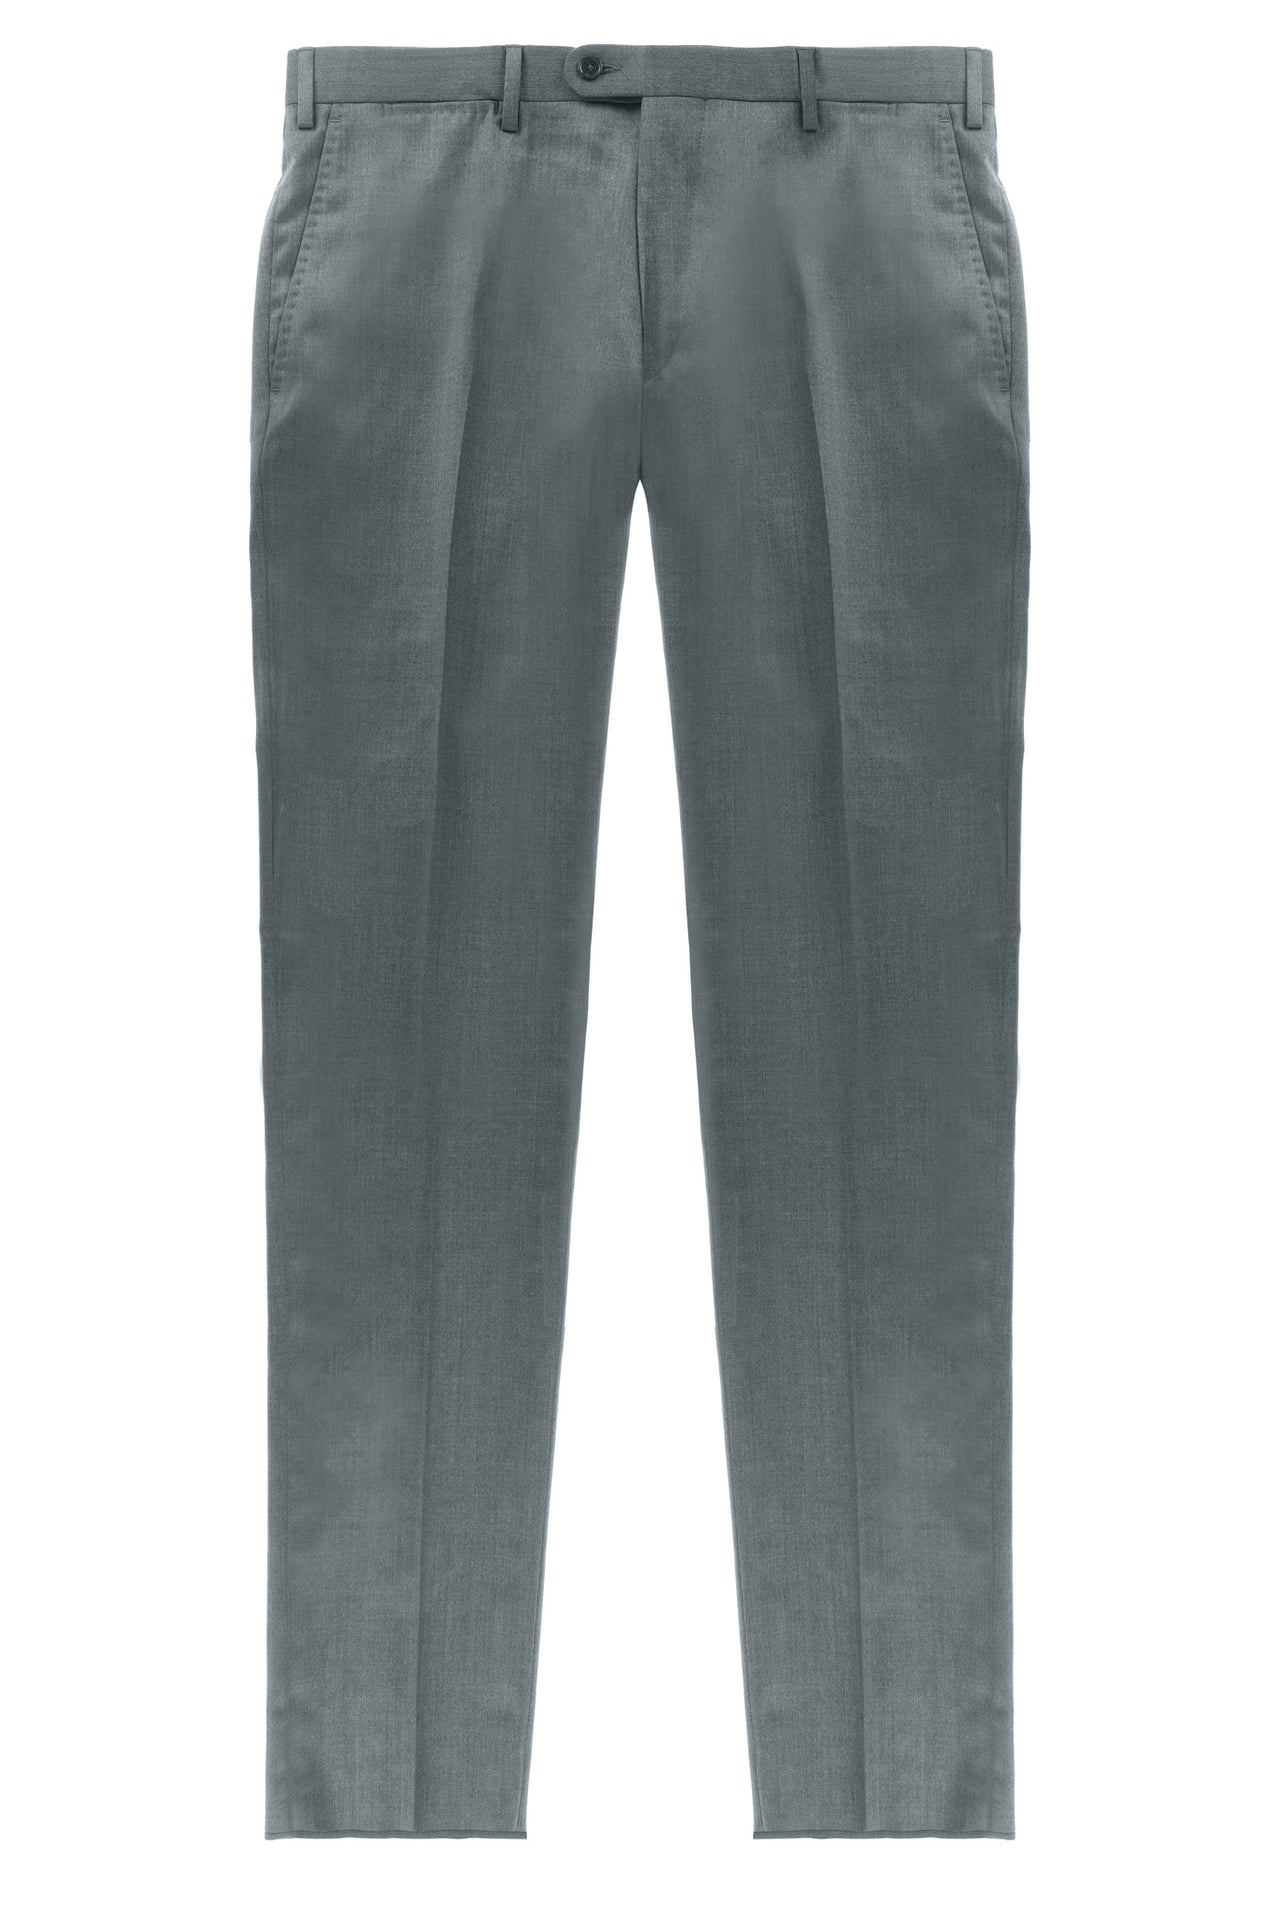 HENRY SARTORIAL Plain Trouser DARK GREY MIX REG